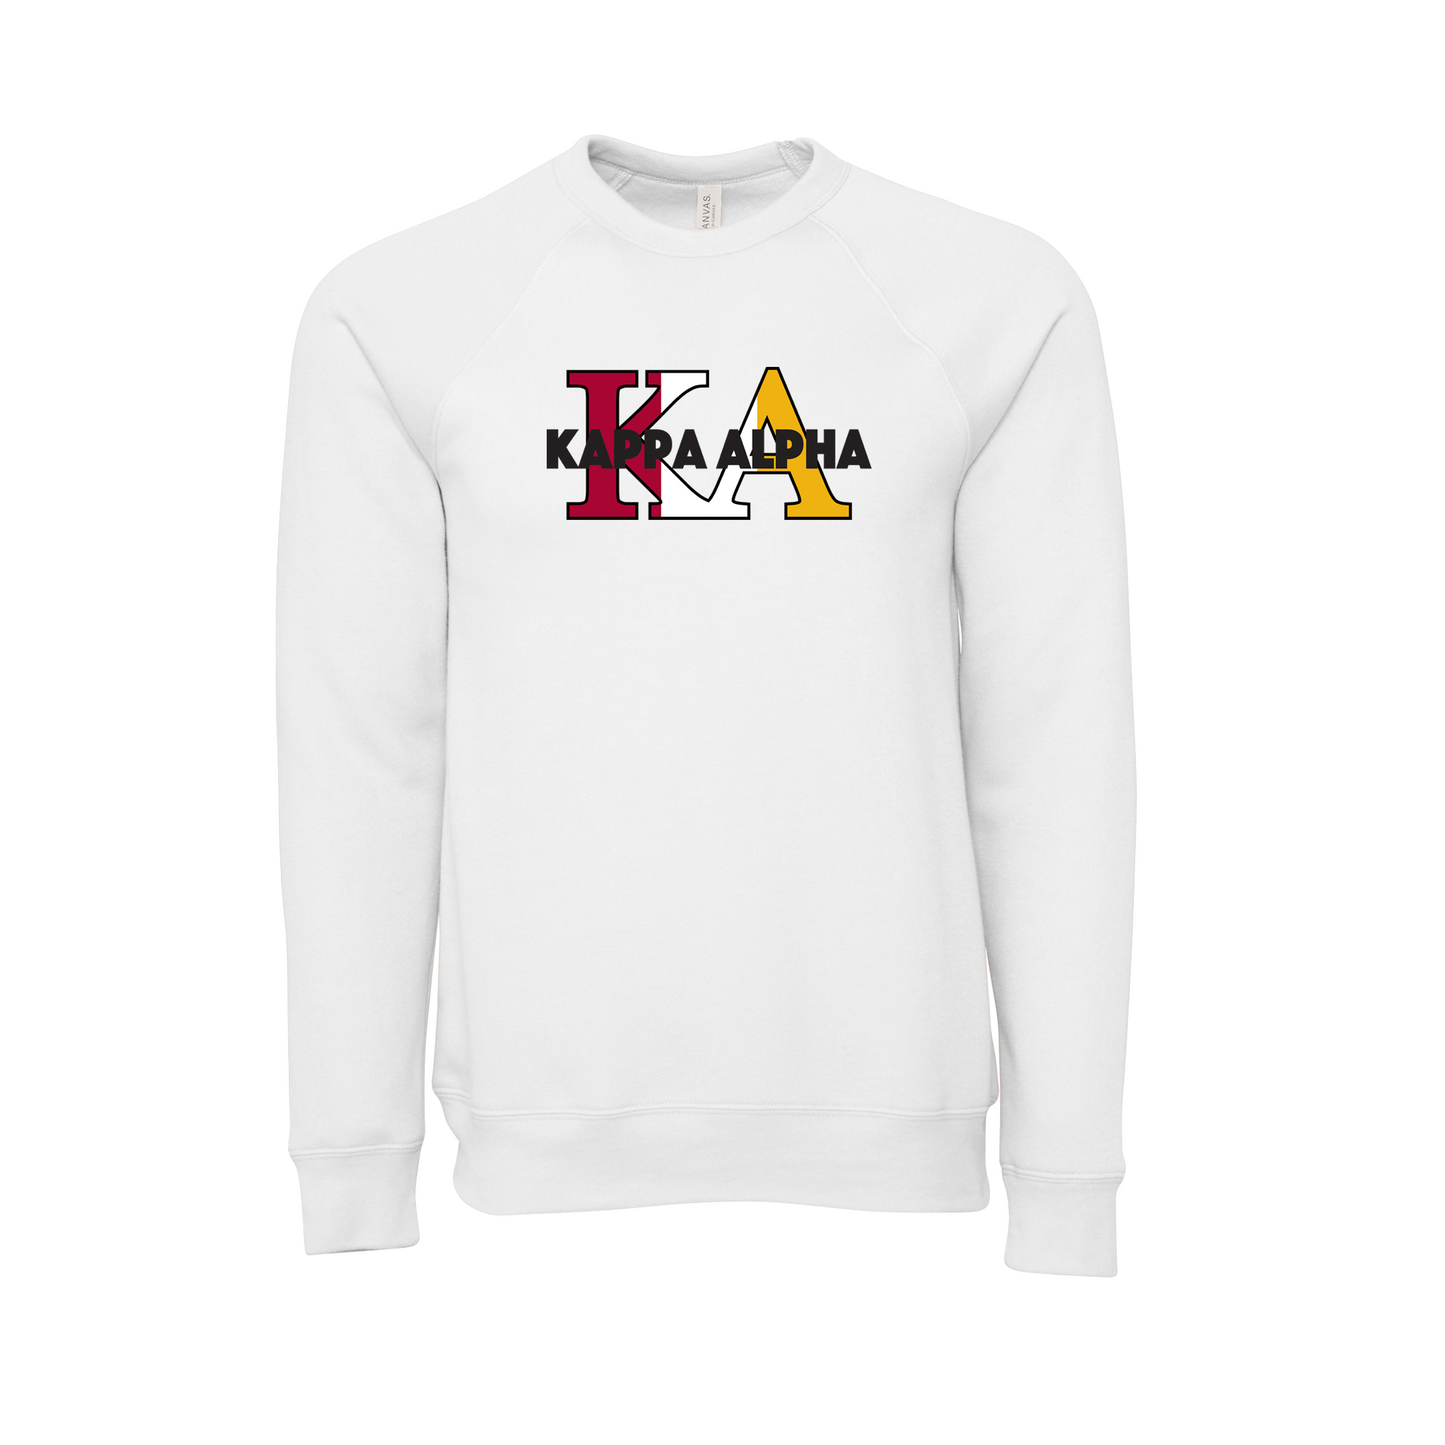 Kappa Alpha Applique Letters Crewneck Sweatshirt